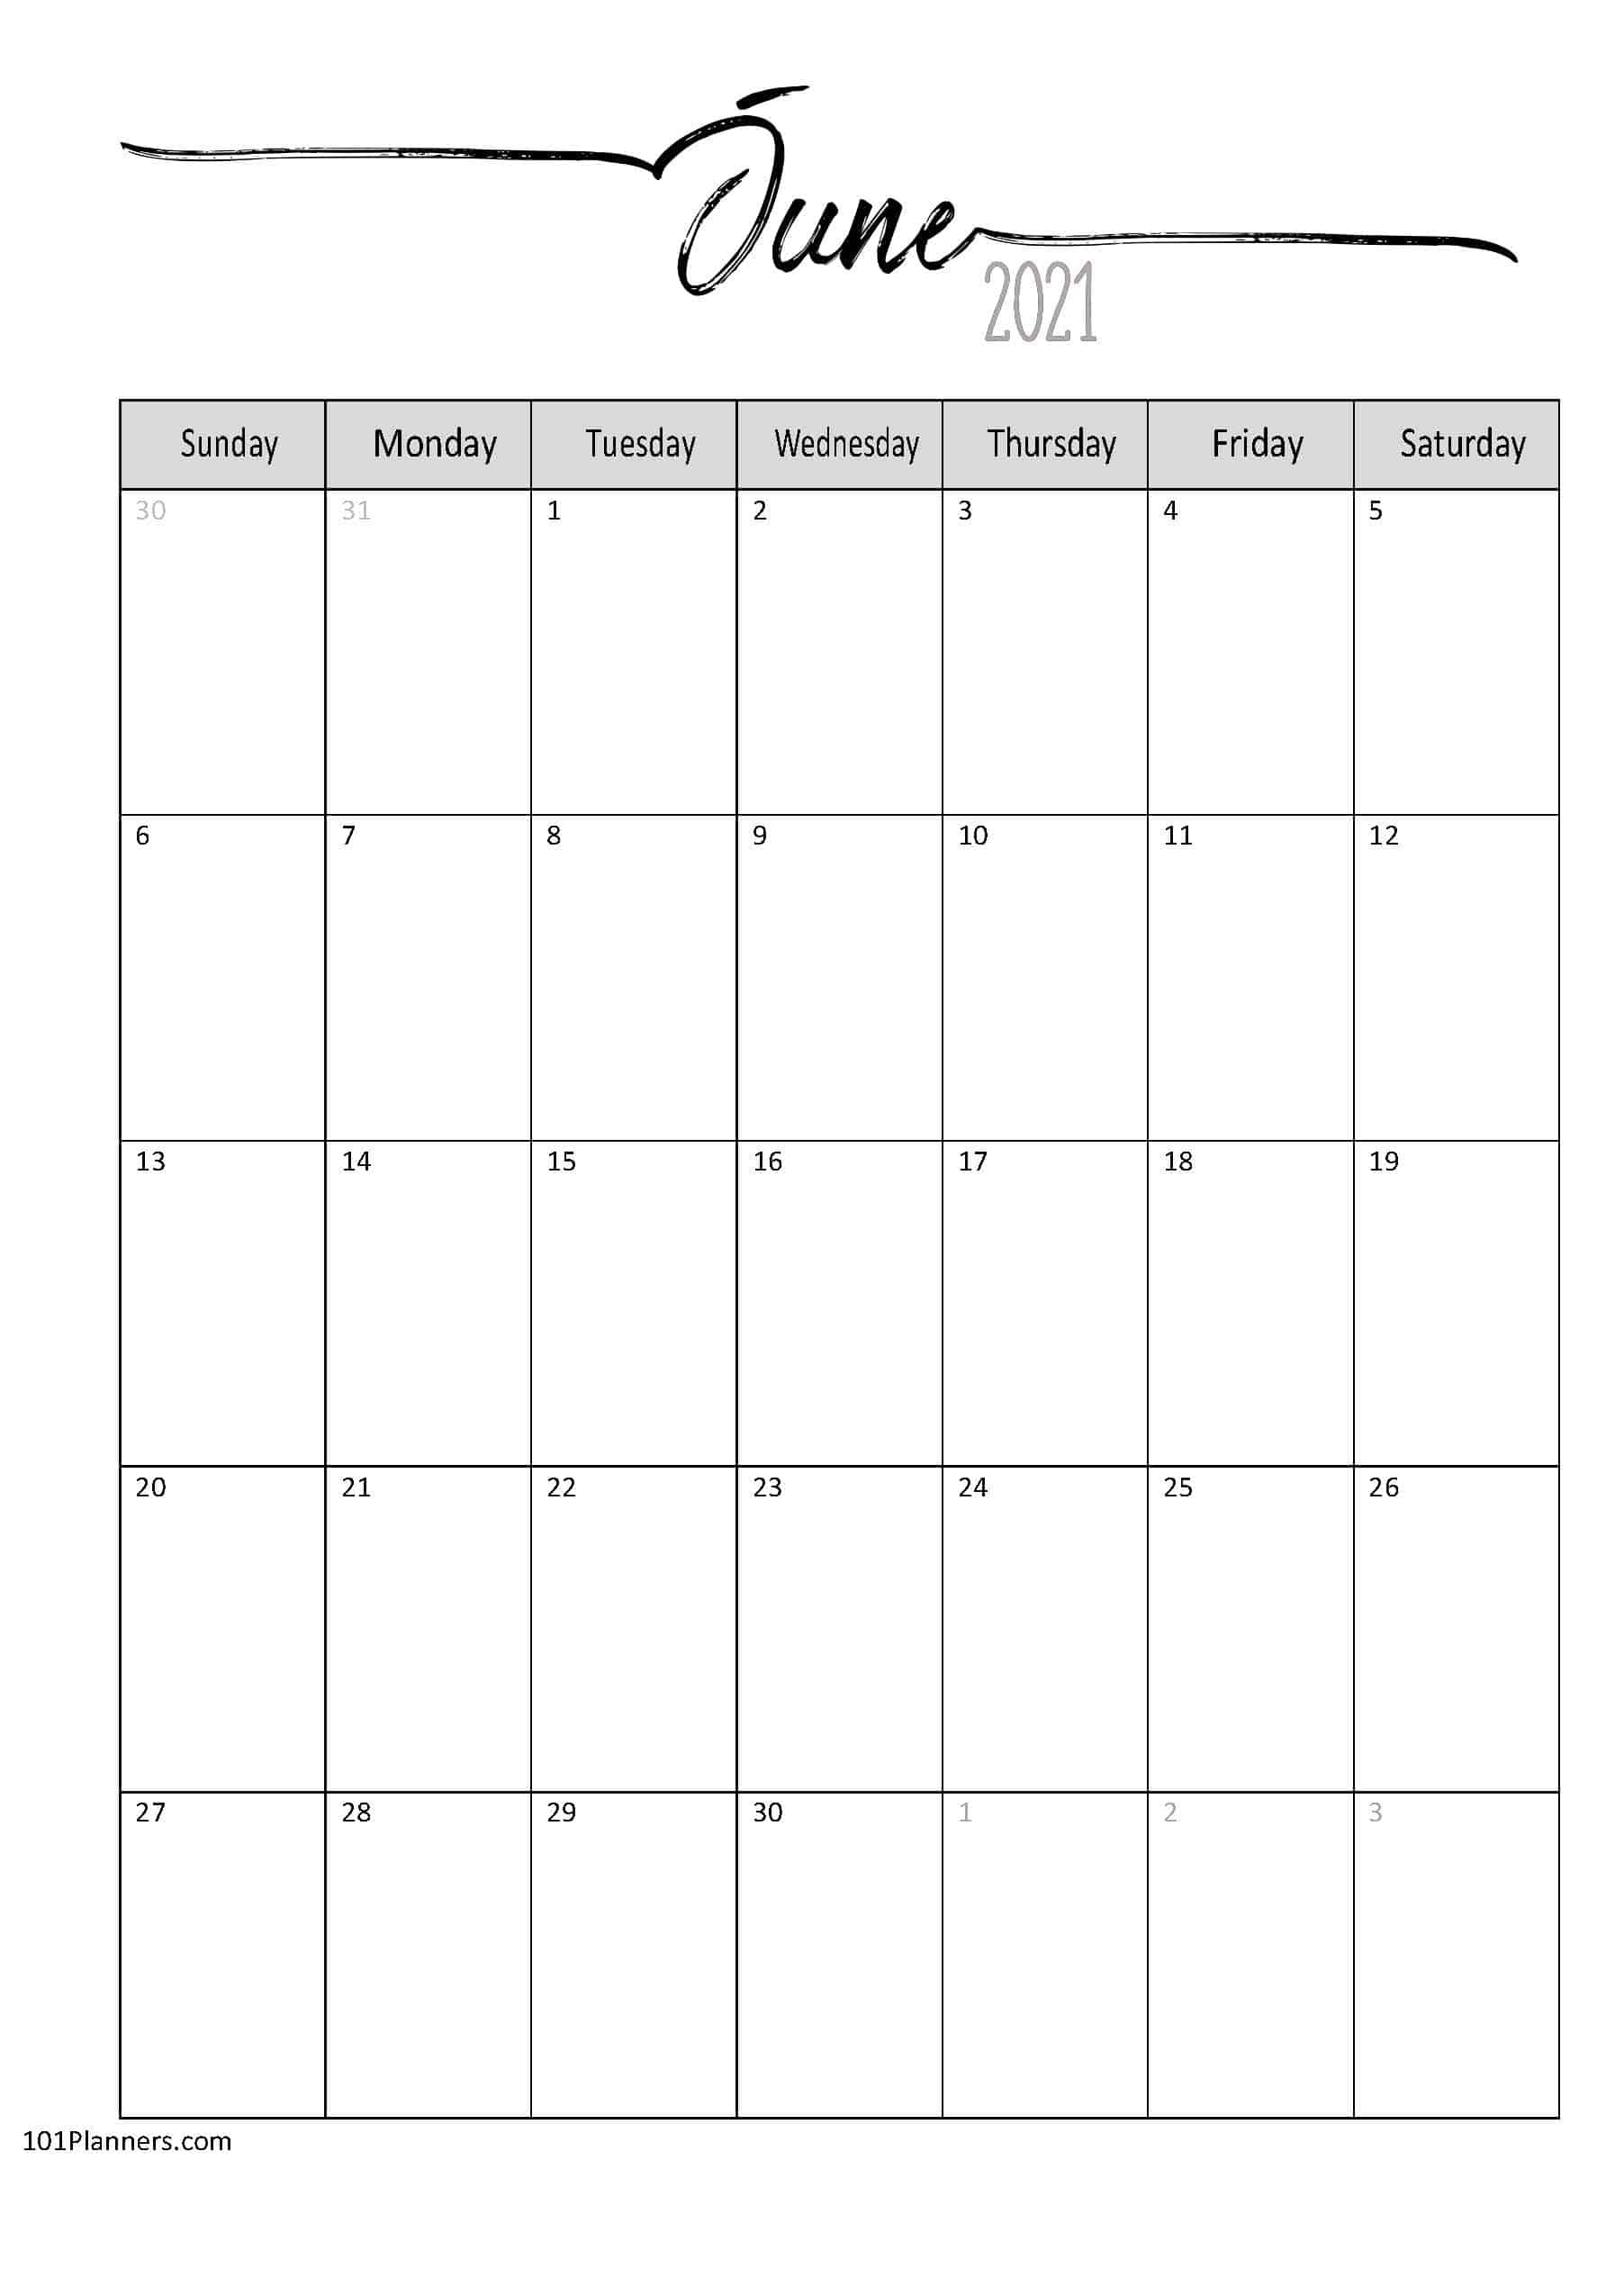 Printable Calendar June 2021 : 60+ Free June 2021 Calendar-Blank June Monthly Calendar Printable 2021 8X10